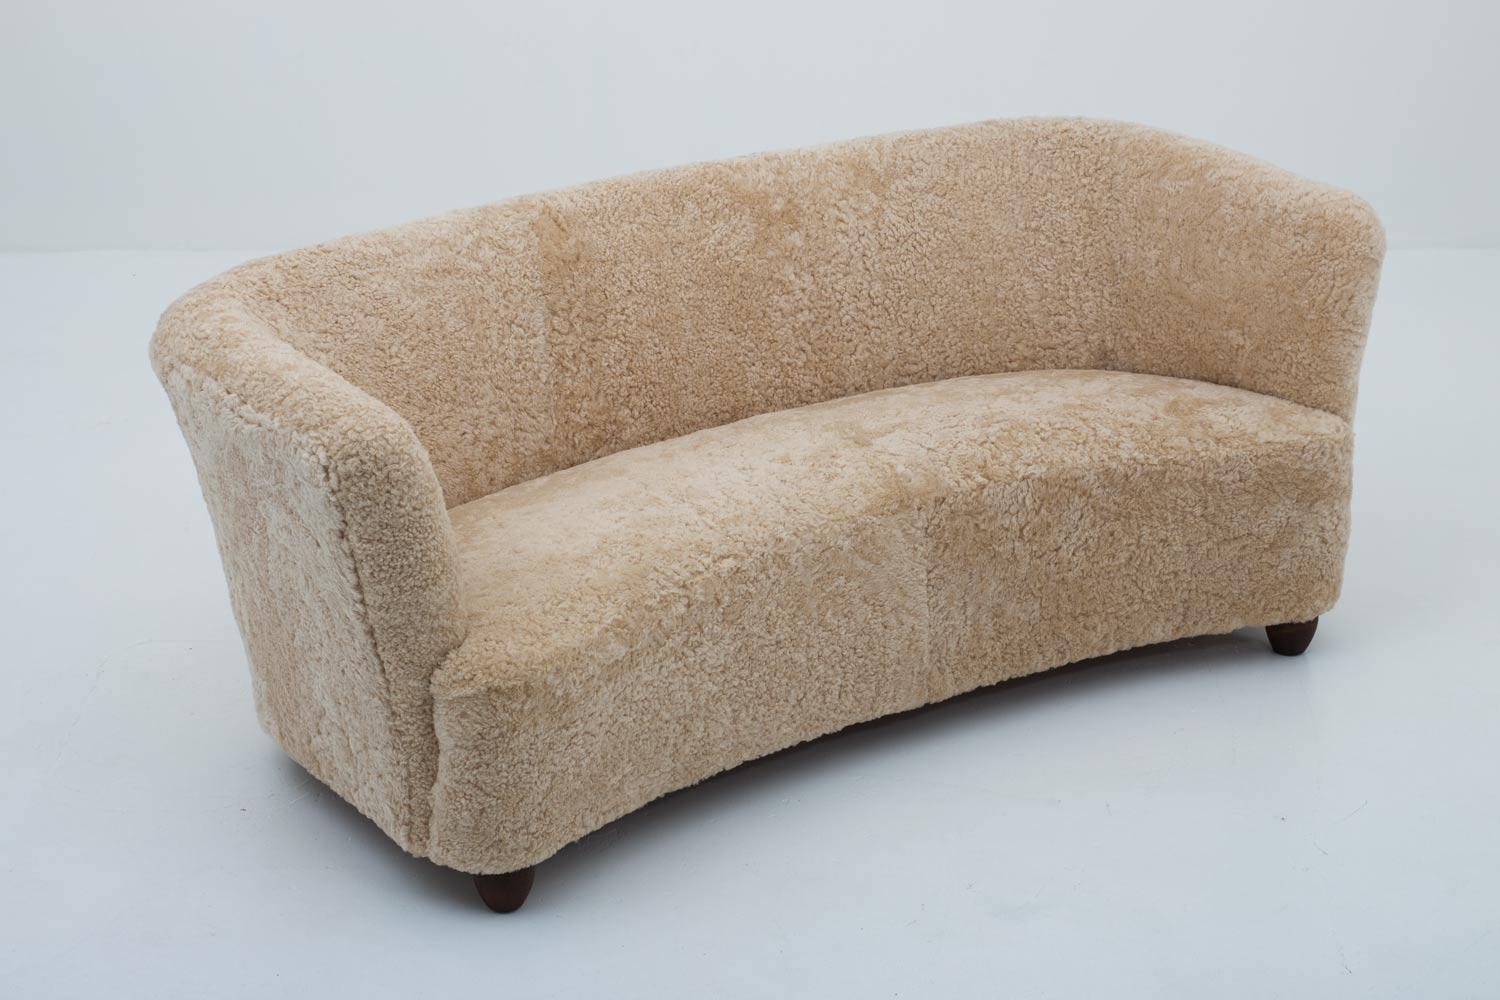 Curved Sheepskin 3-Seat Sofa 1940s, Denmark 1